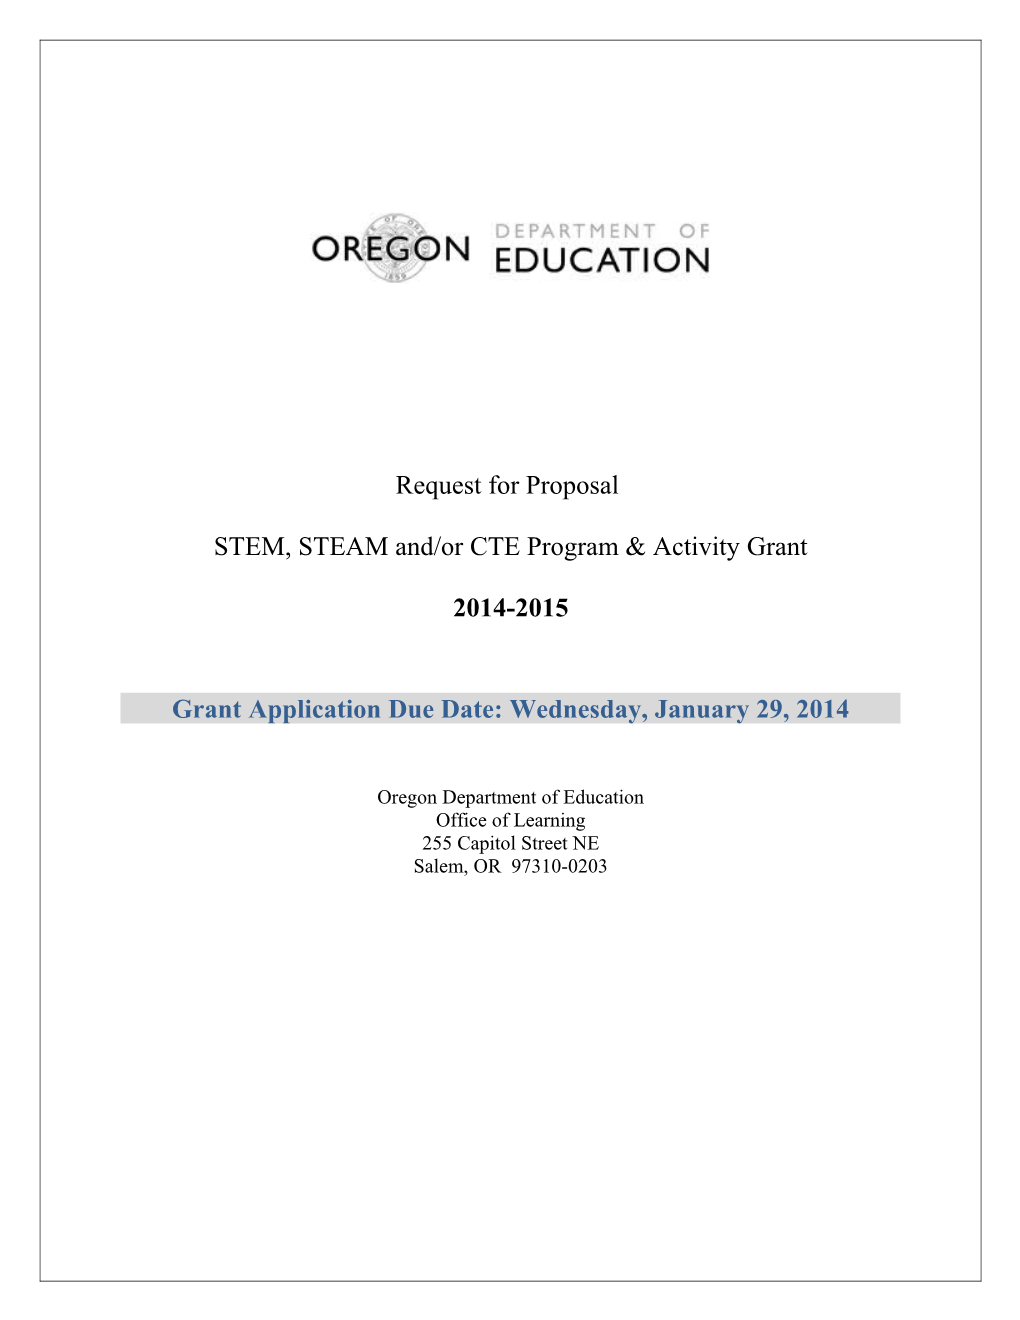 STEM, STEAM And/Or CTE Program & Activity Grant